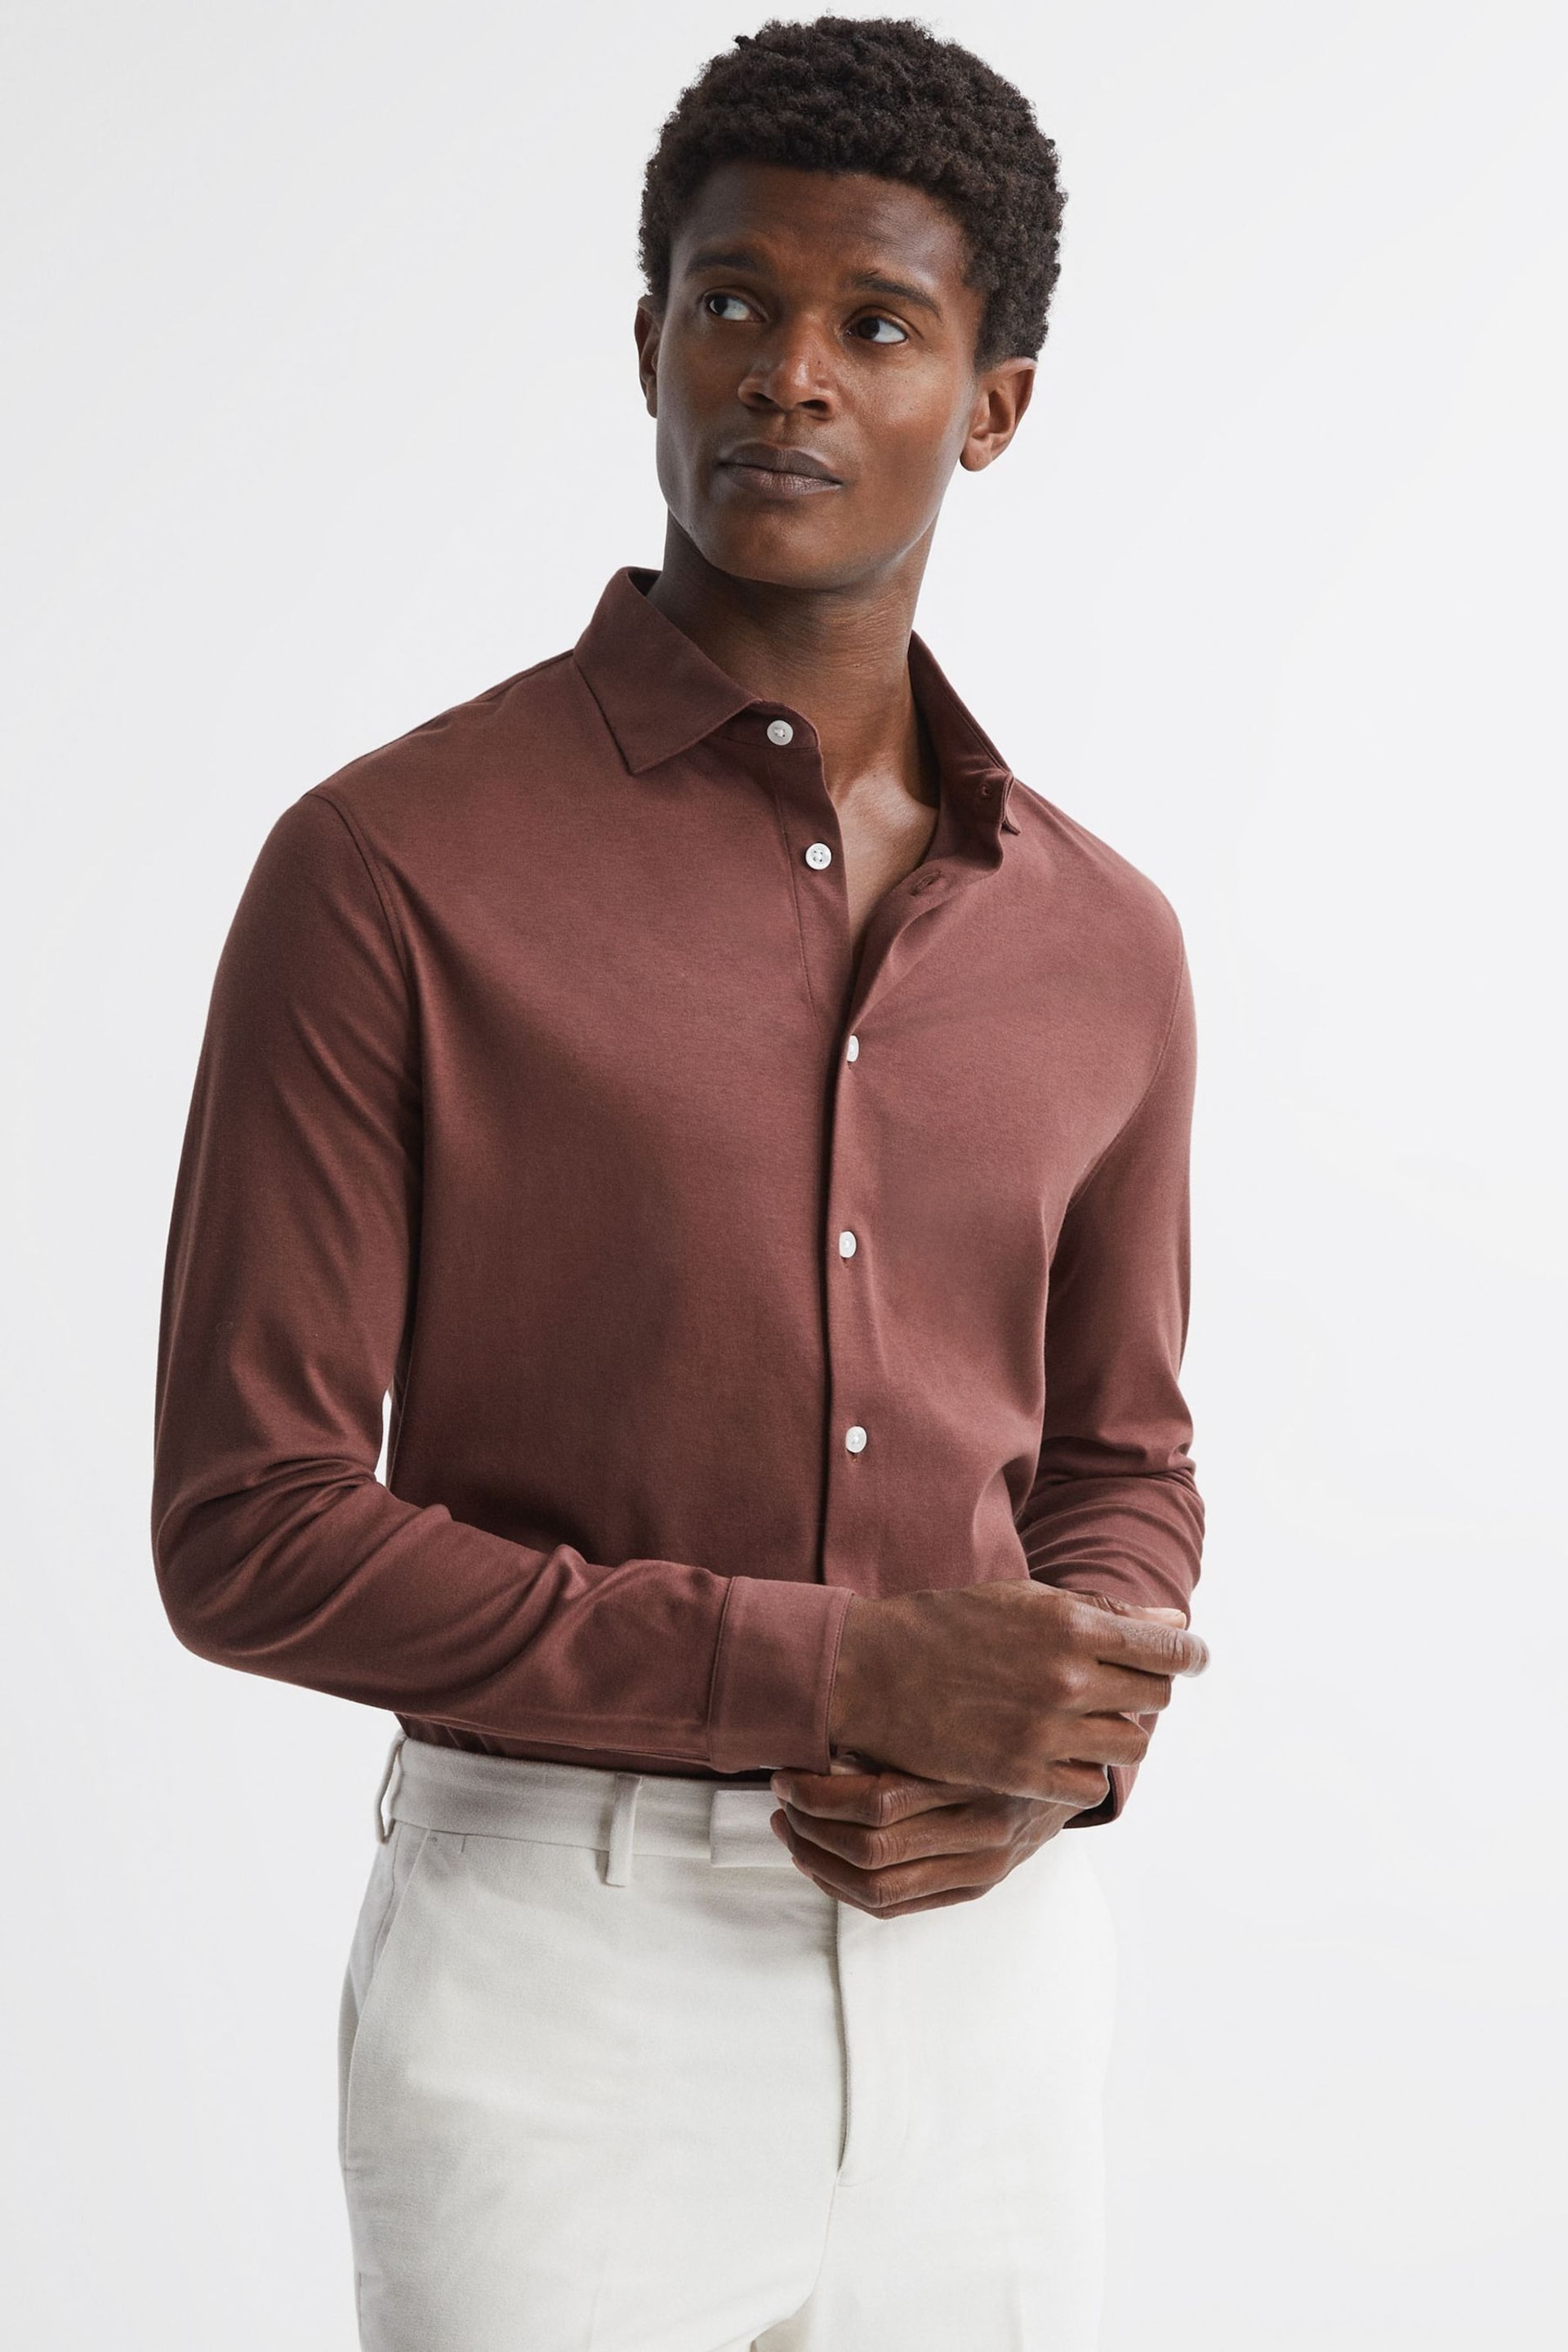 Reiss Copper Viscount Slim Fit Mercerised Cotton Jersey Shirt - Image 1 of 5